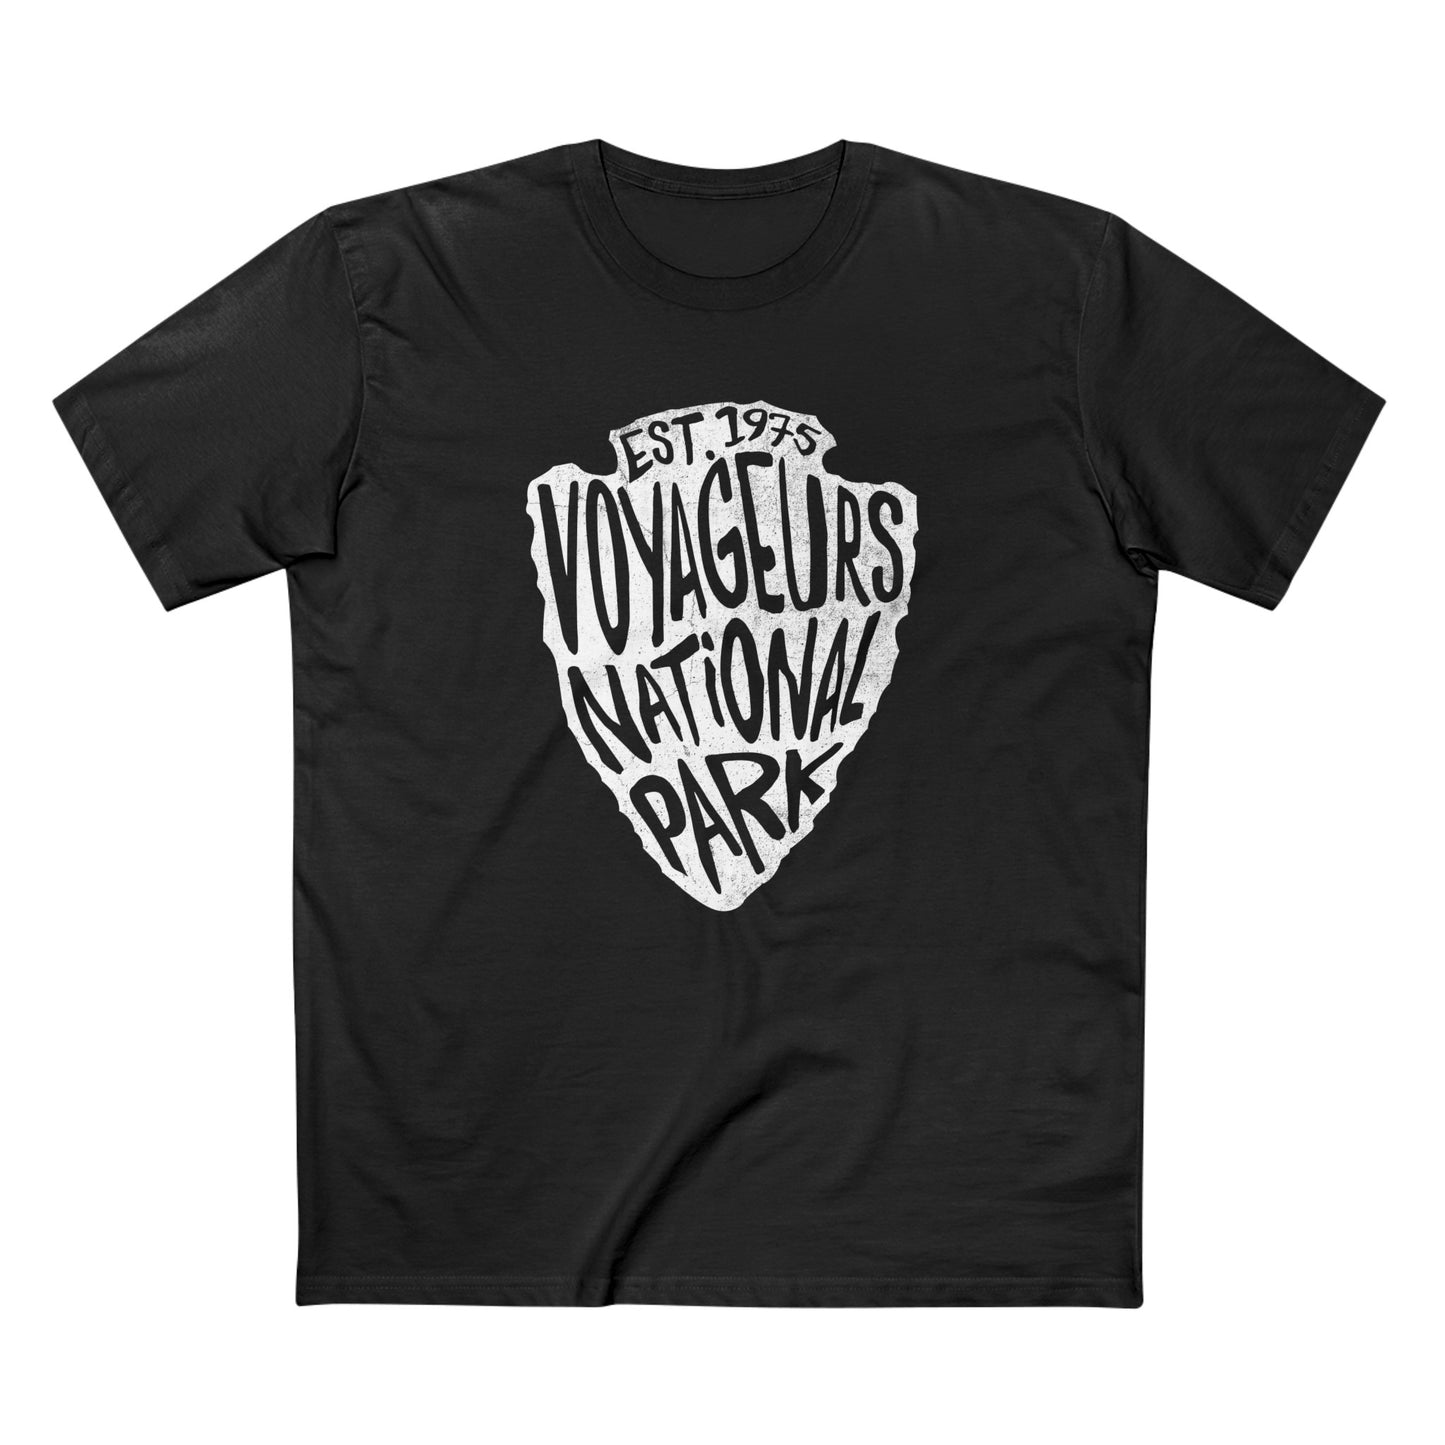 Voyageurs National Park T-Shirt - Arrowhead Design